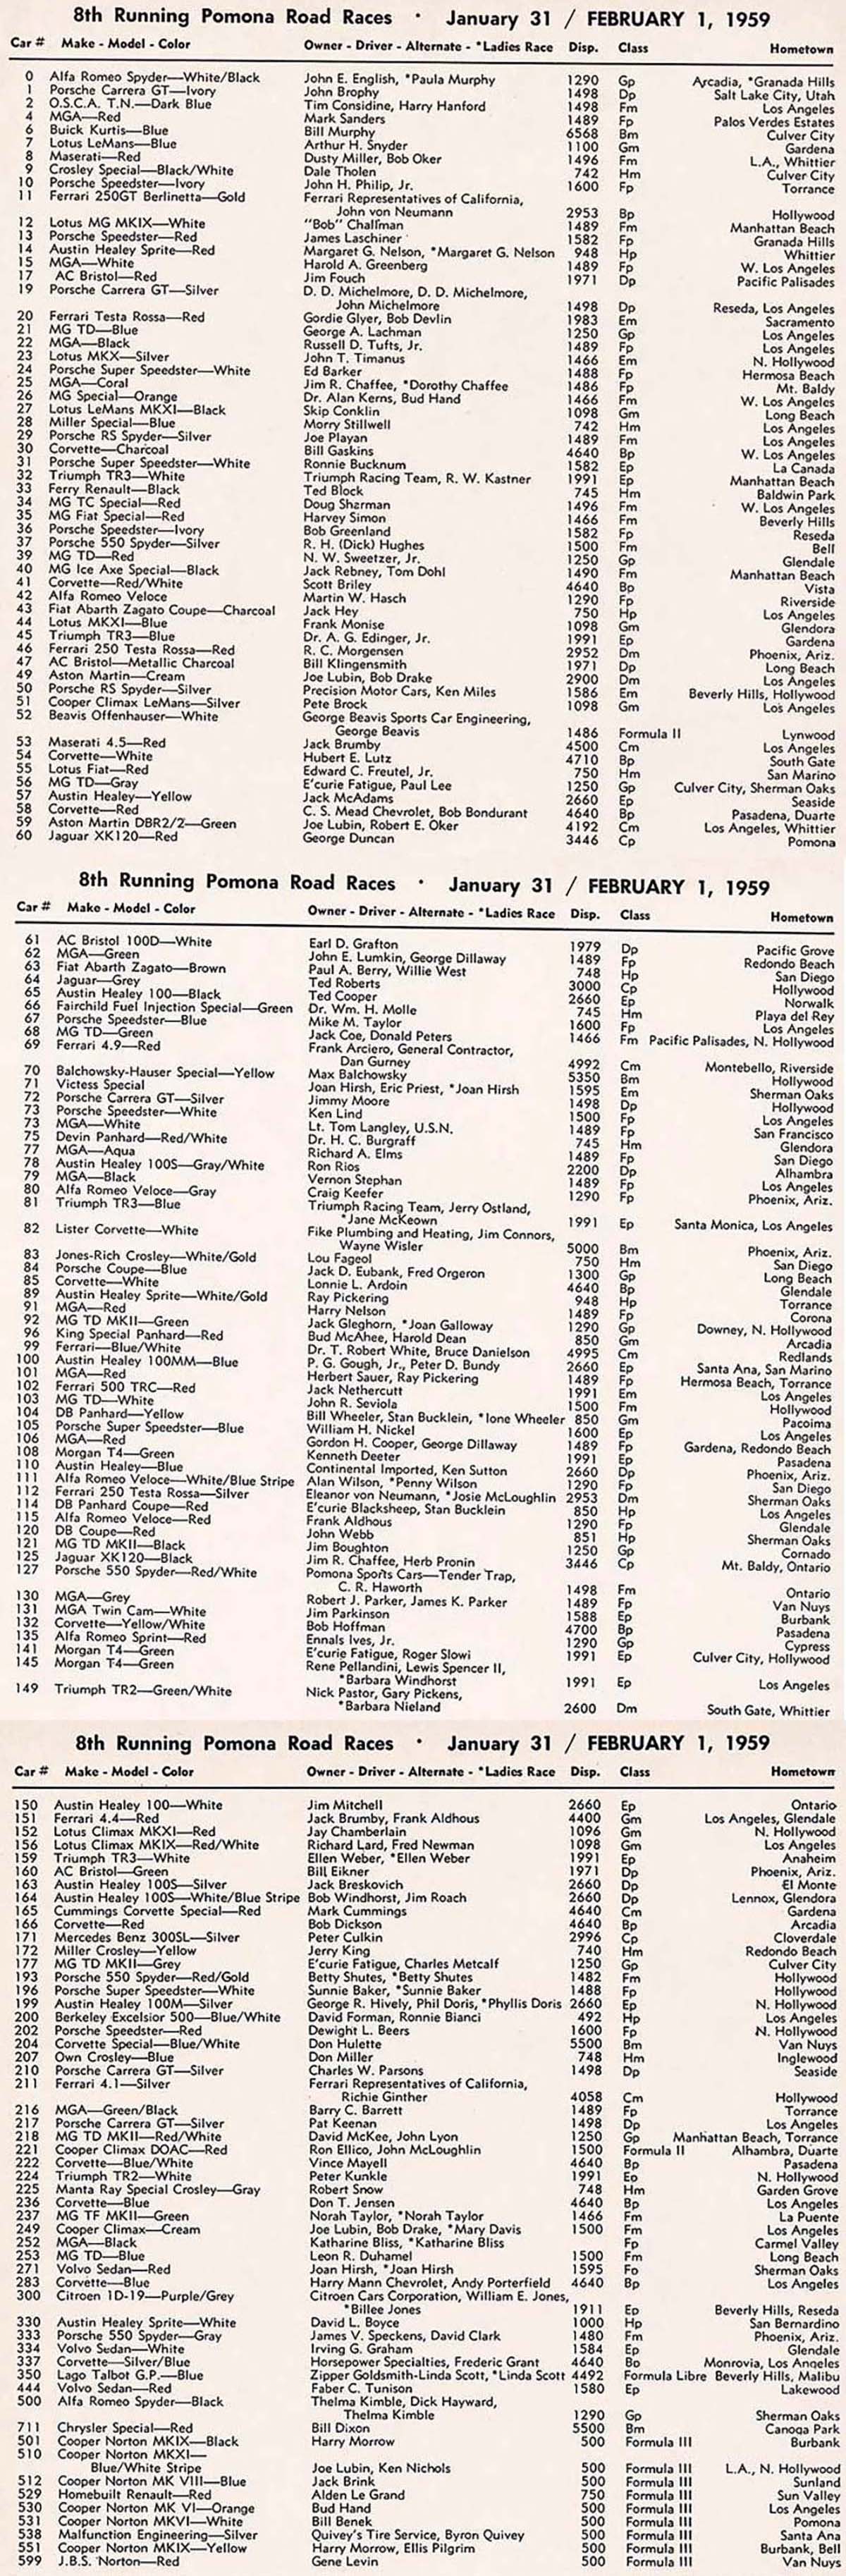 1959 Road Race at Pomona